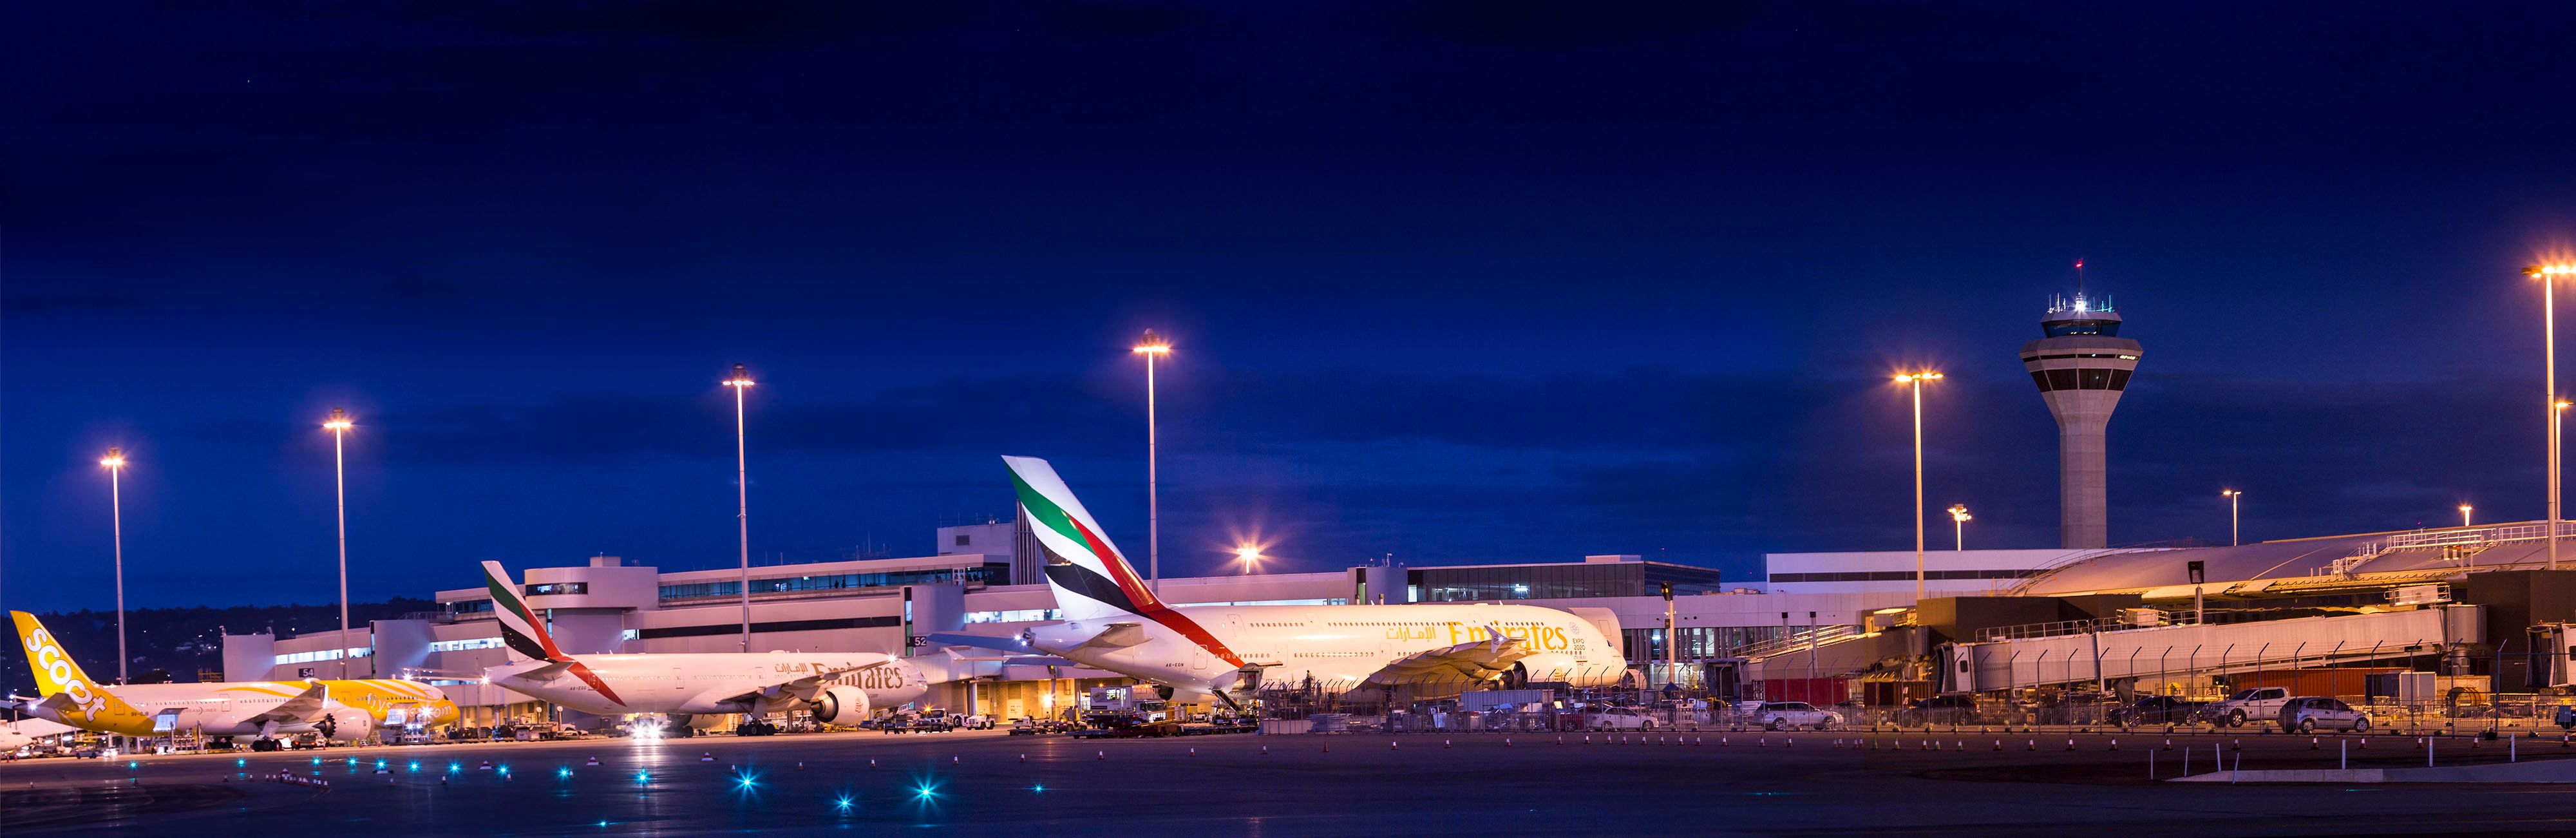 Perth Airport International Terminal Aircraft On Apron